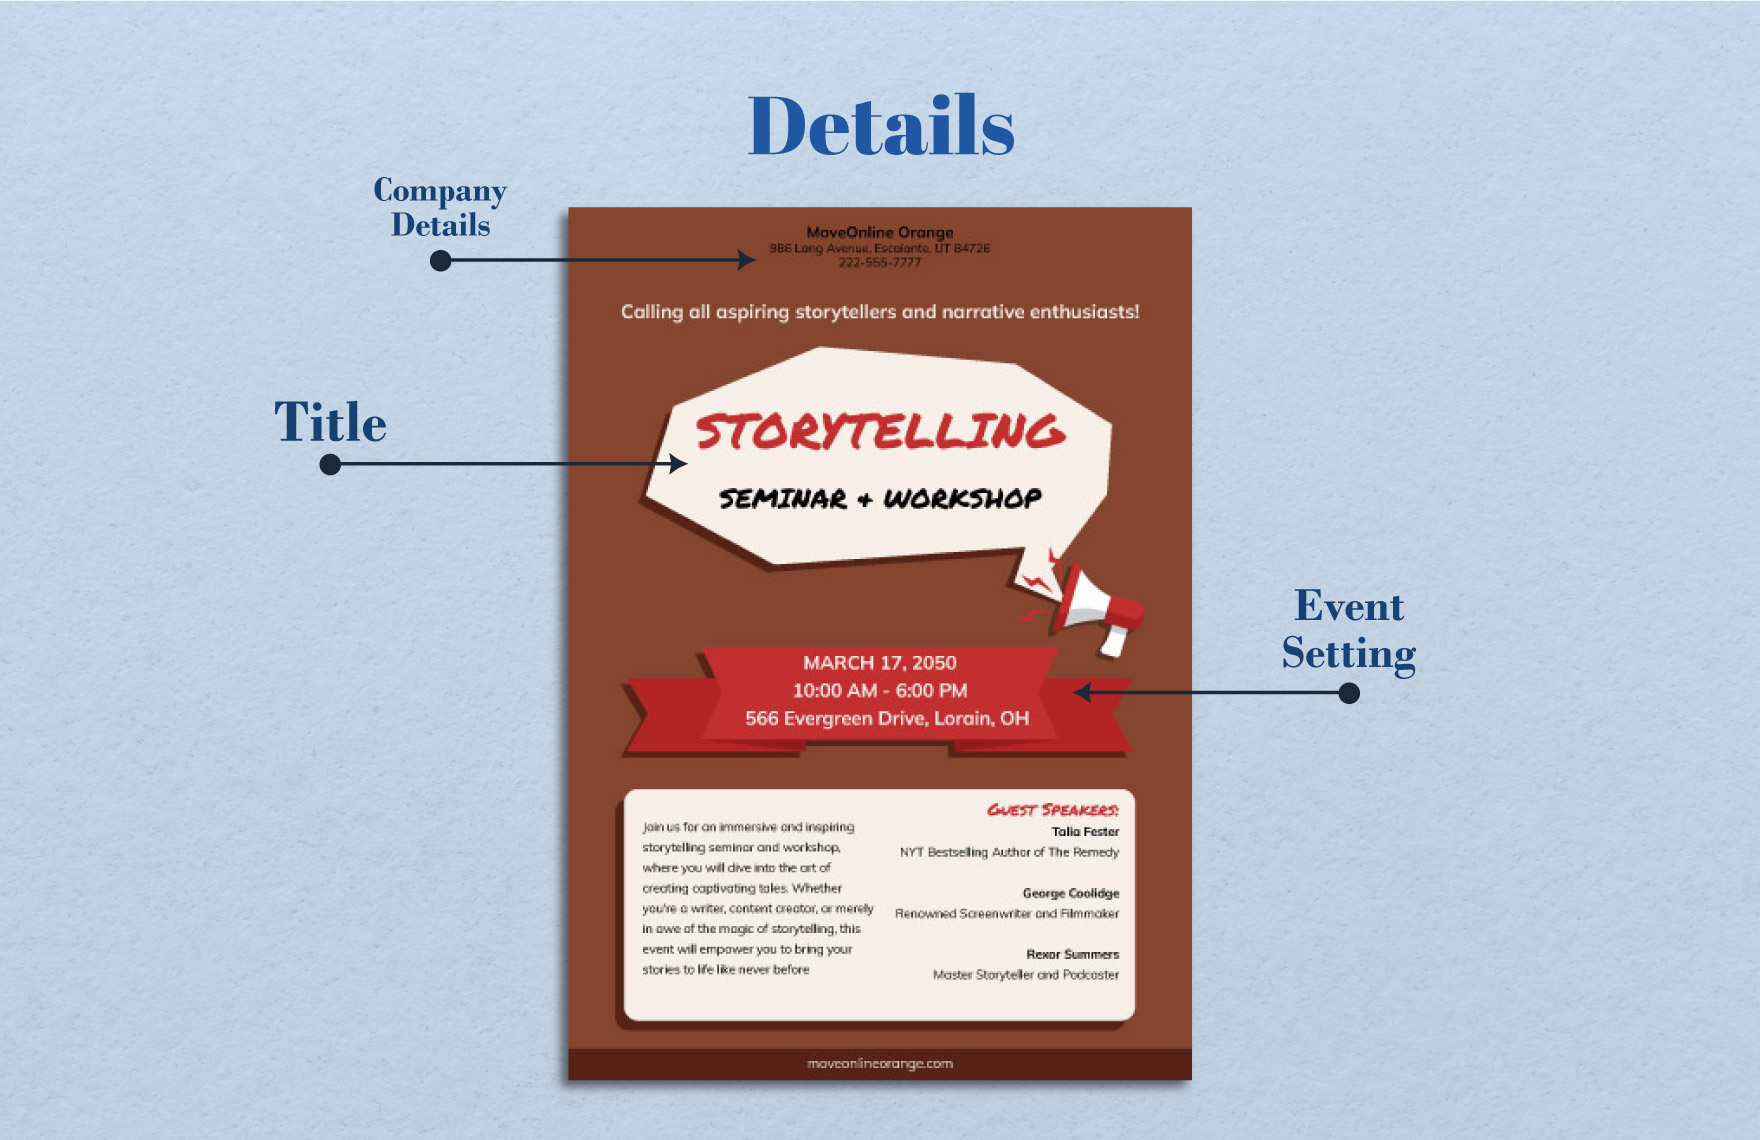 Move Online Orange Storytelling Seminar & Workshop